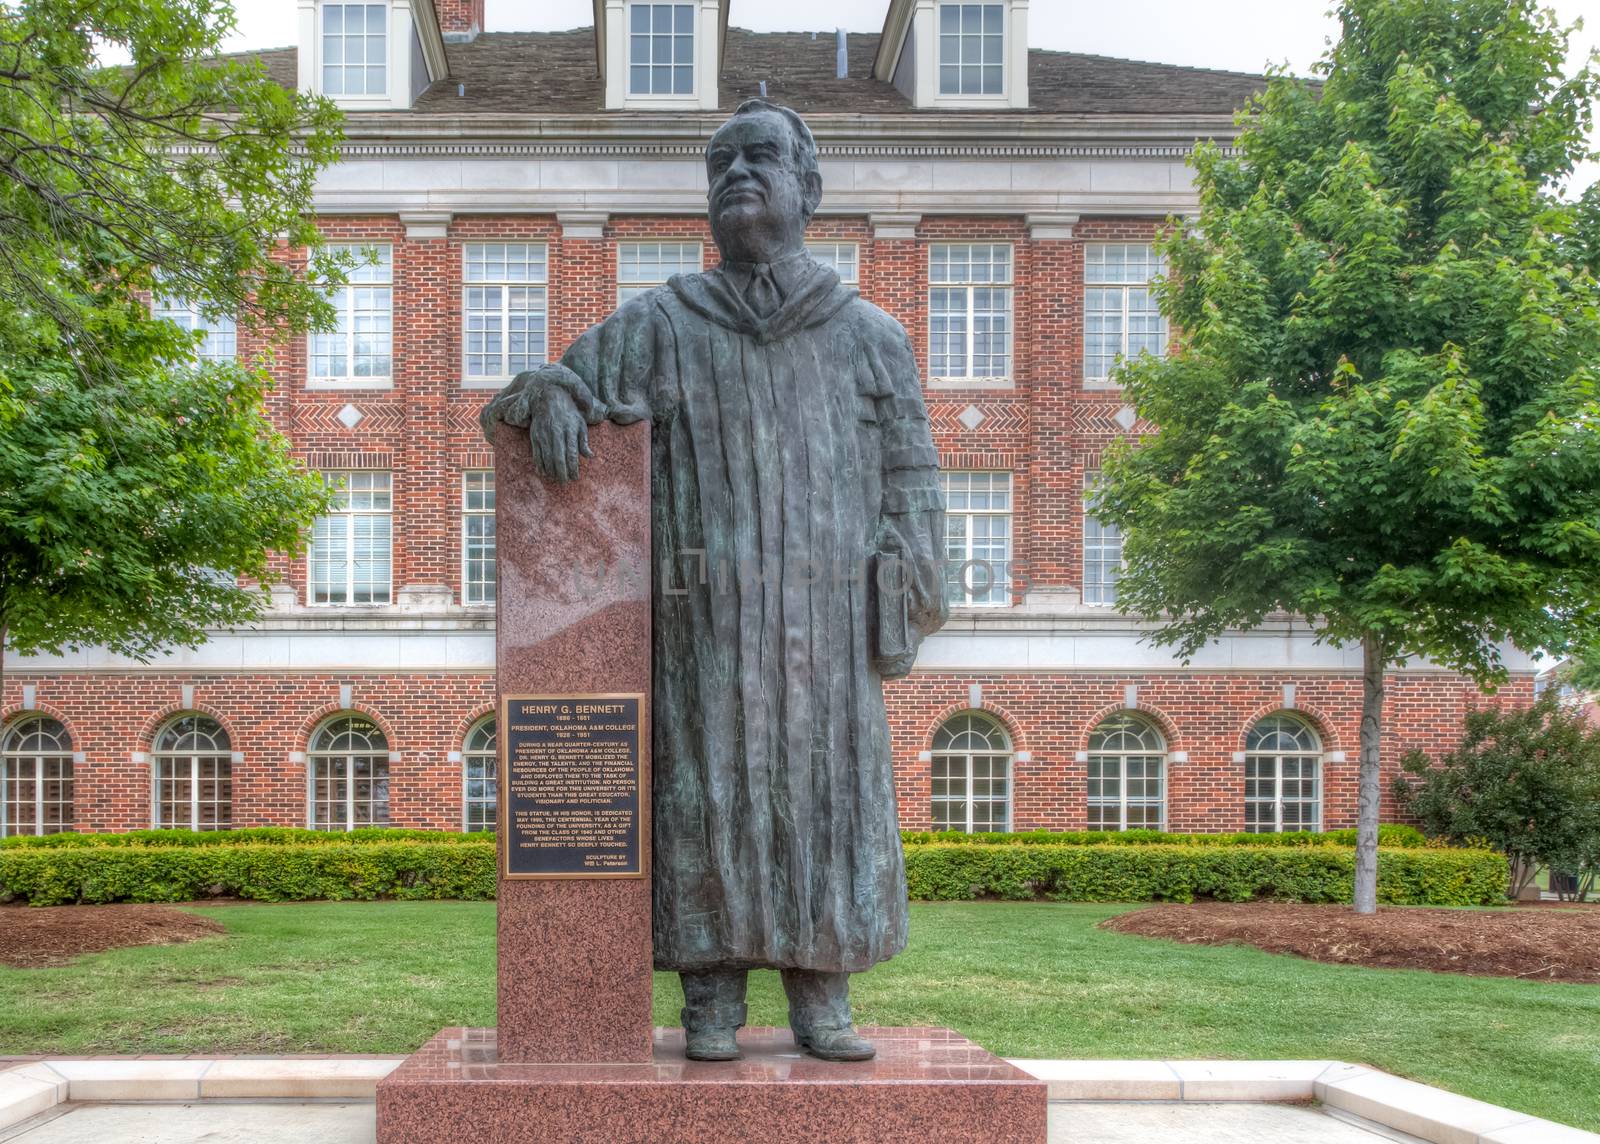 STILLWATER, OK/USA - MAY 20, 2016: Henry G. Bennett Statue on the campus of Oklahoma State University.